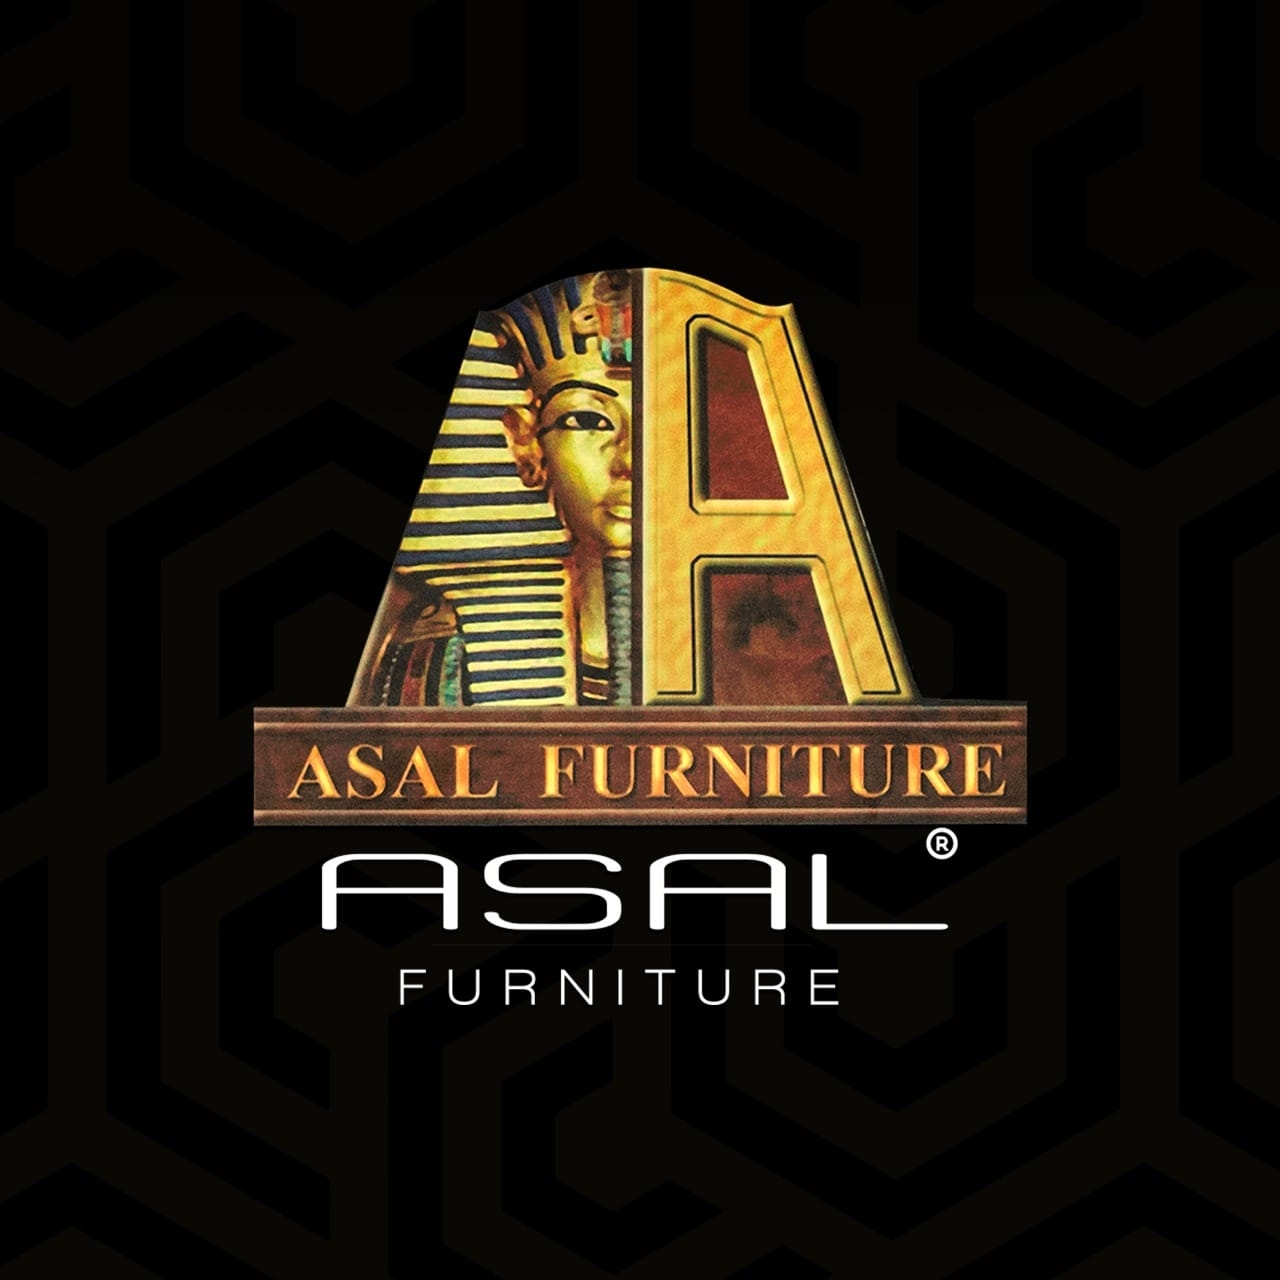 Asal furniture